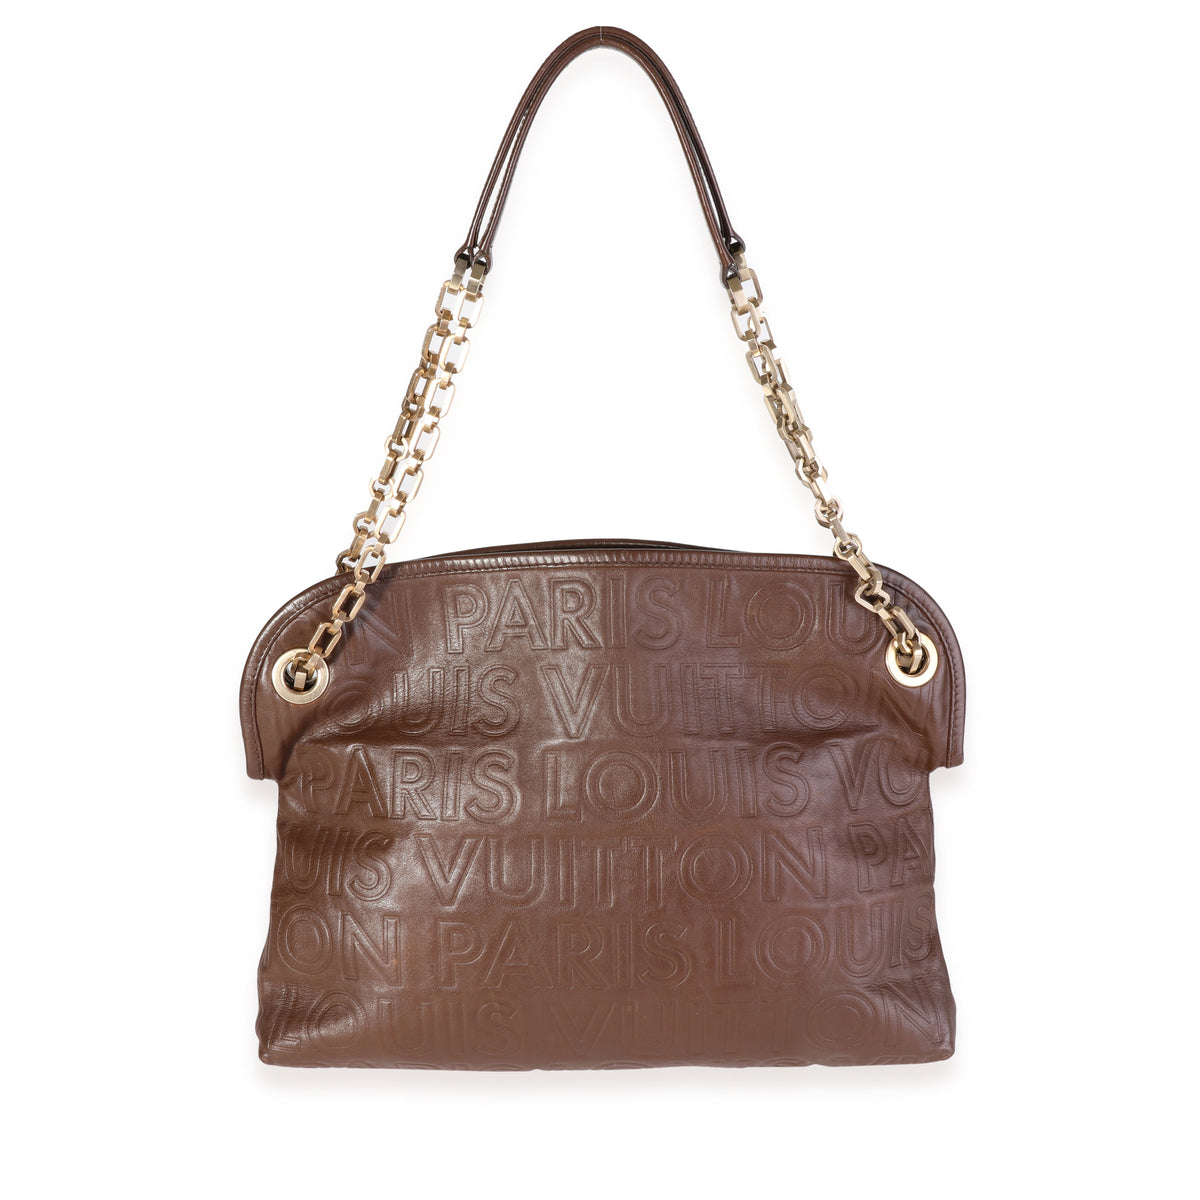 Louis Vuitton Shoulder Bags Limited Edition Handbags for Women